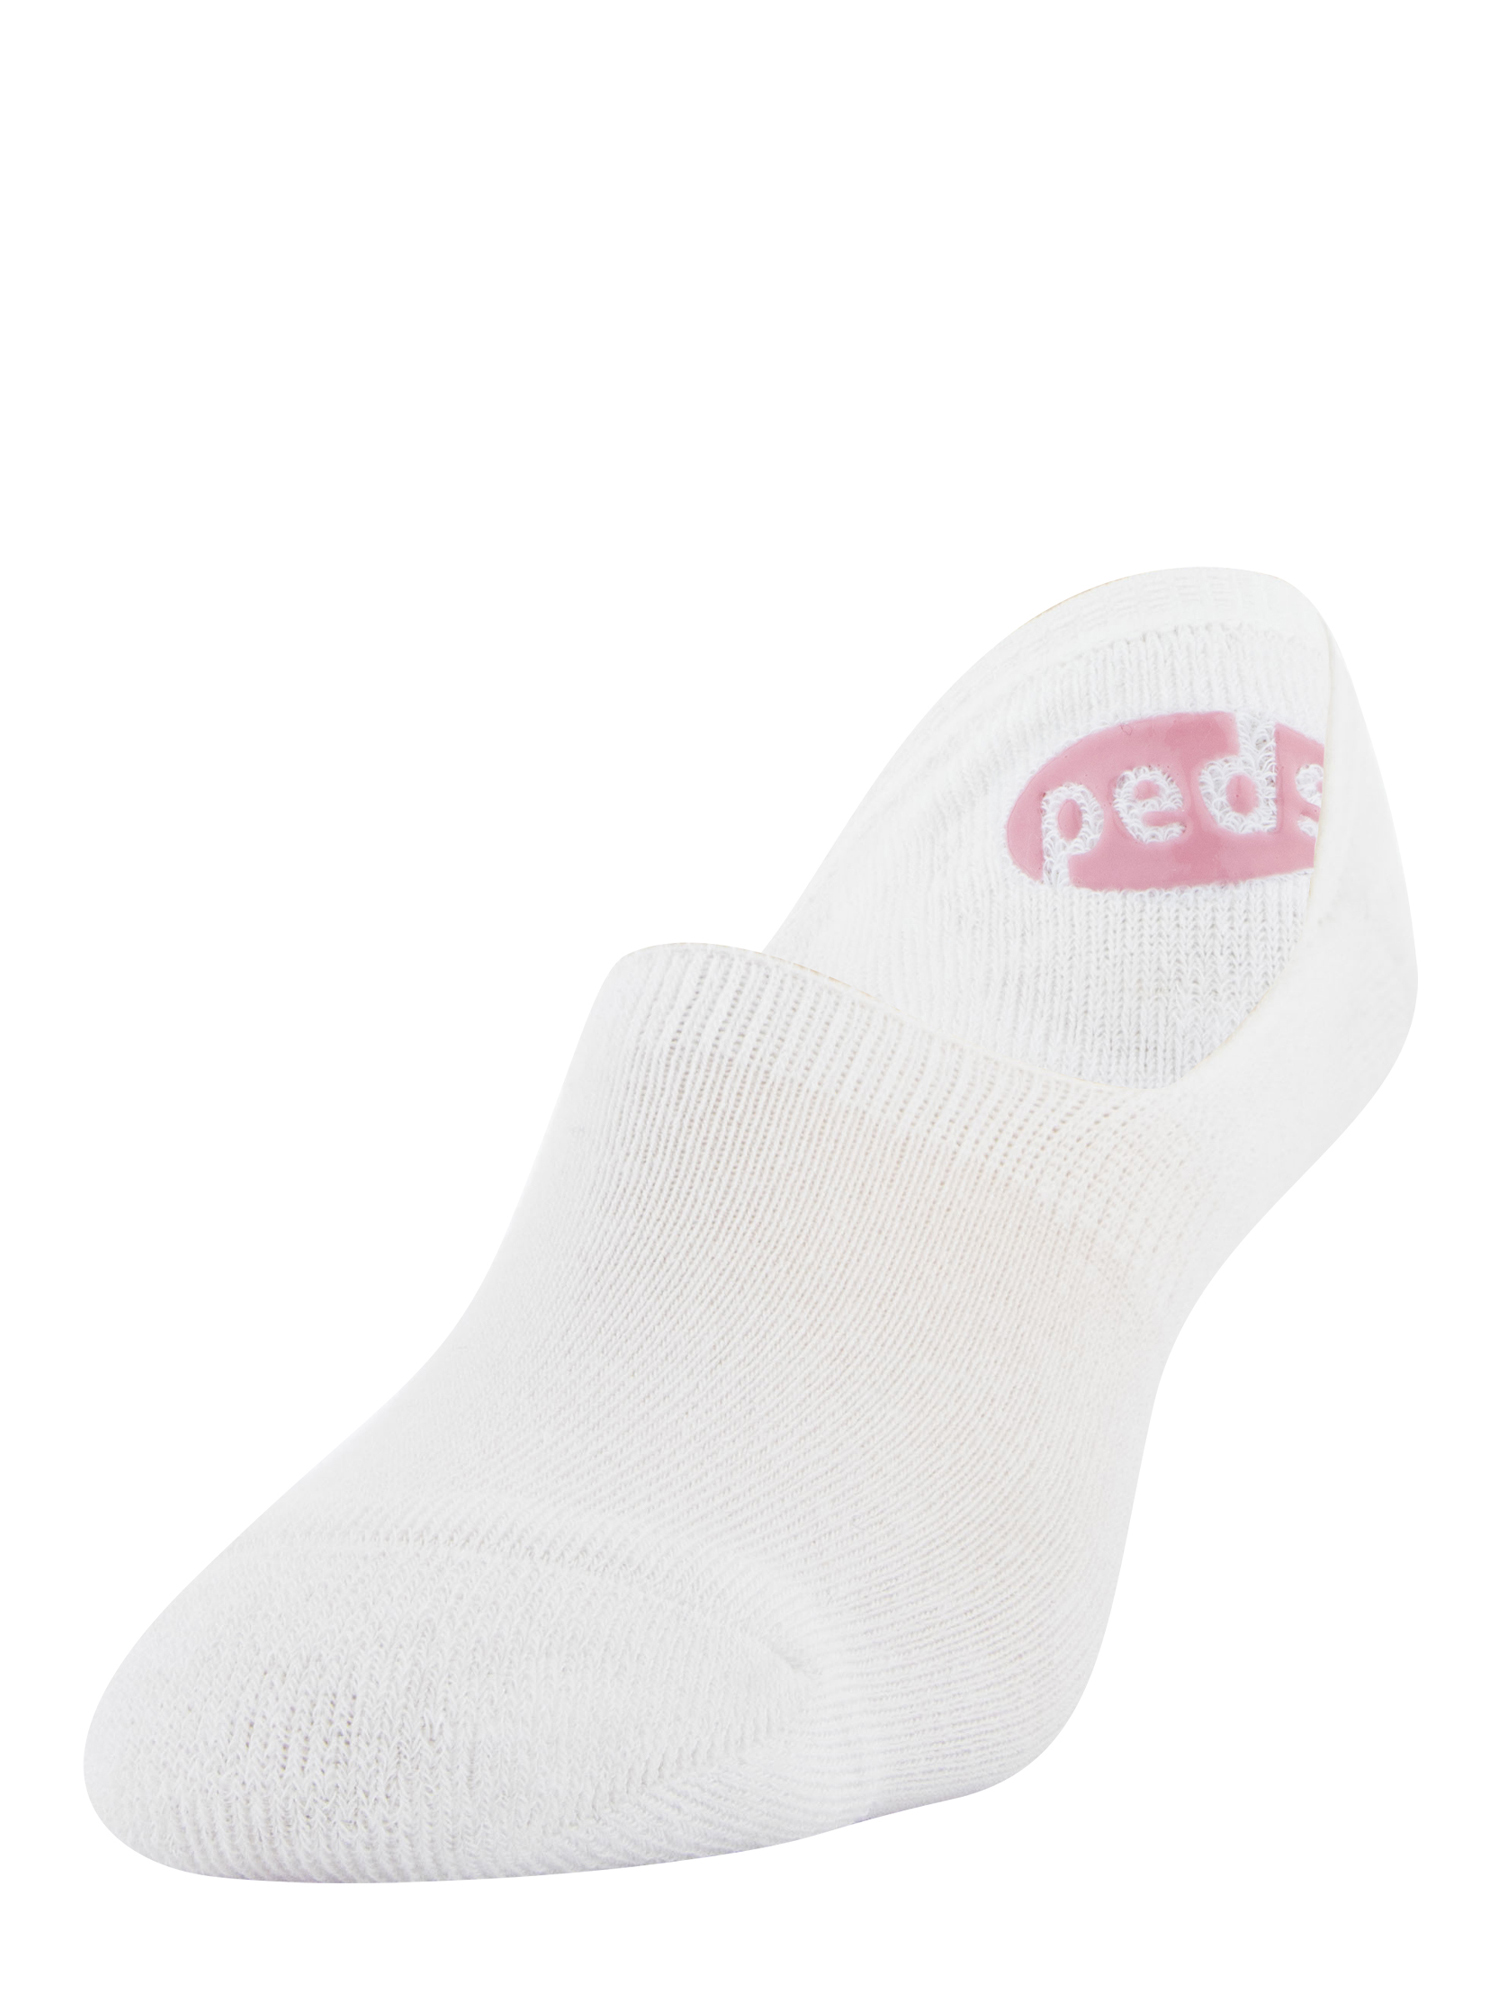 Peds Women's Lightweight High Cut Liner Socks, Shoe Sizes 5-10 and 8-12 ...